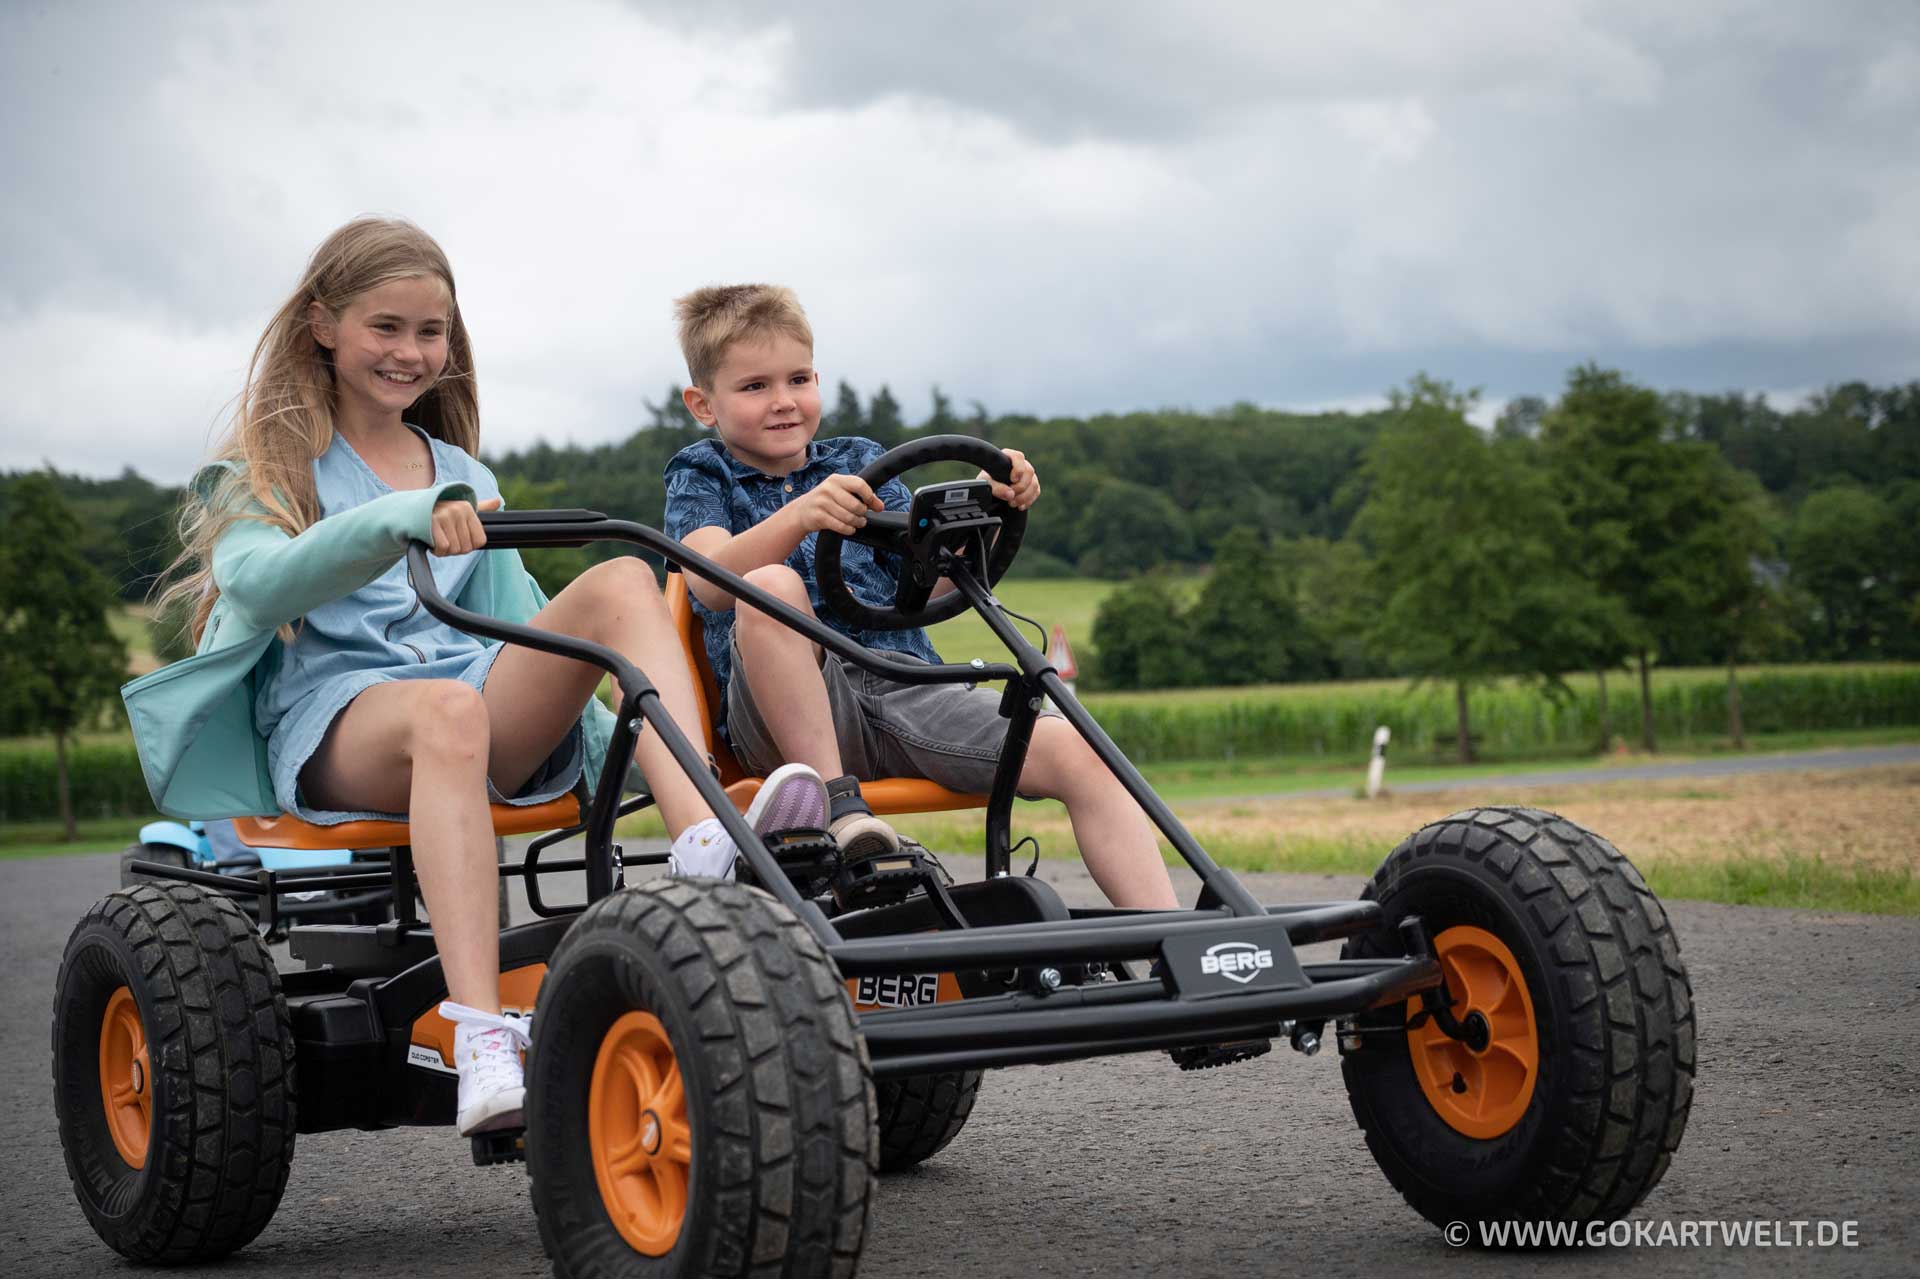 BERG Duo Coaster BFR Pedal Gokart 010 Kettcar hat aufregende Kindheitserinnerung geschaffen